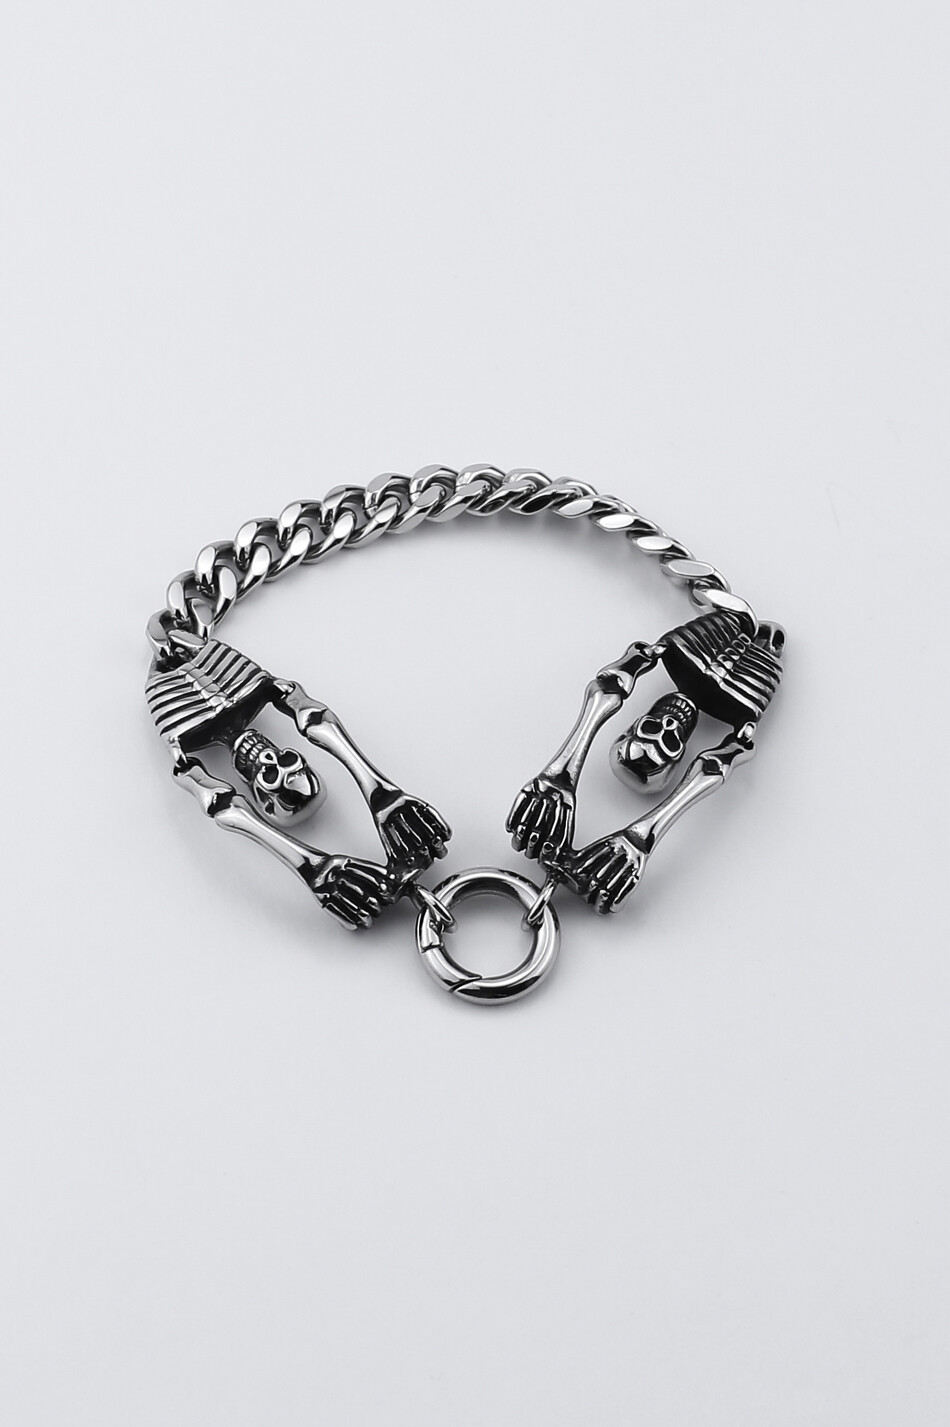 Bracelet "Skeletons on a chain"